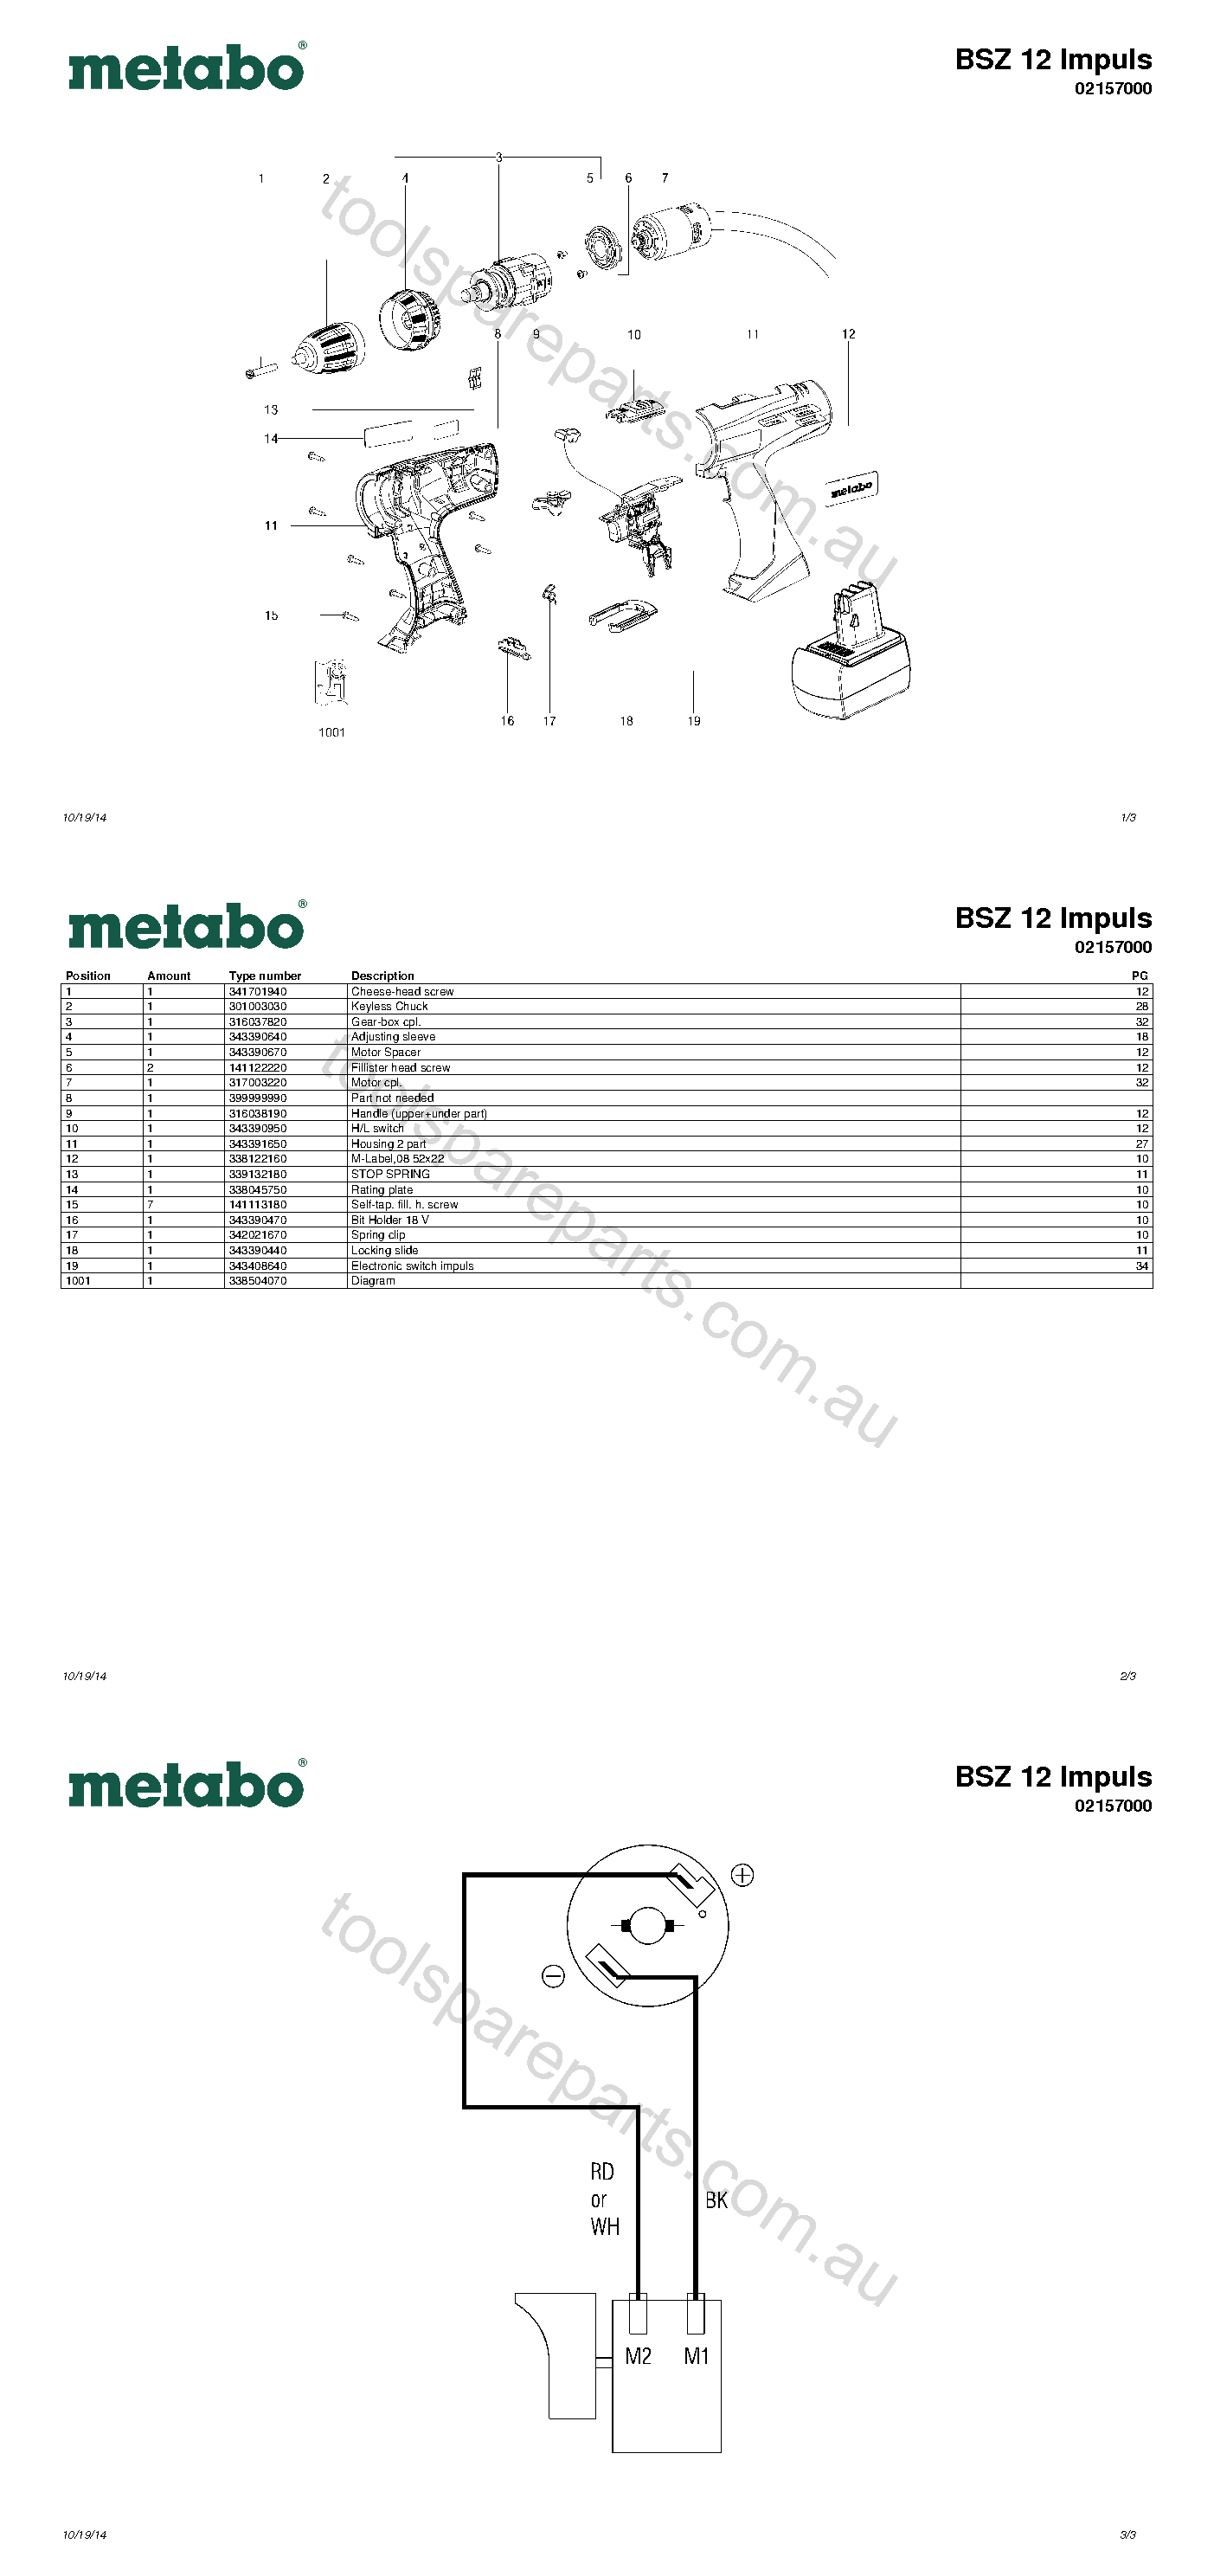 Metabo BSZ 12 Impuls 02157000  Diagram 1